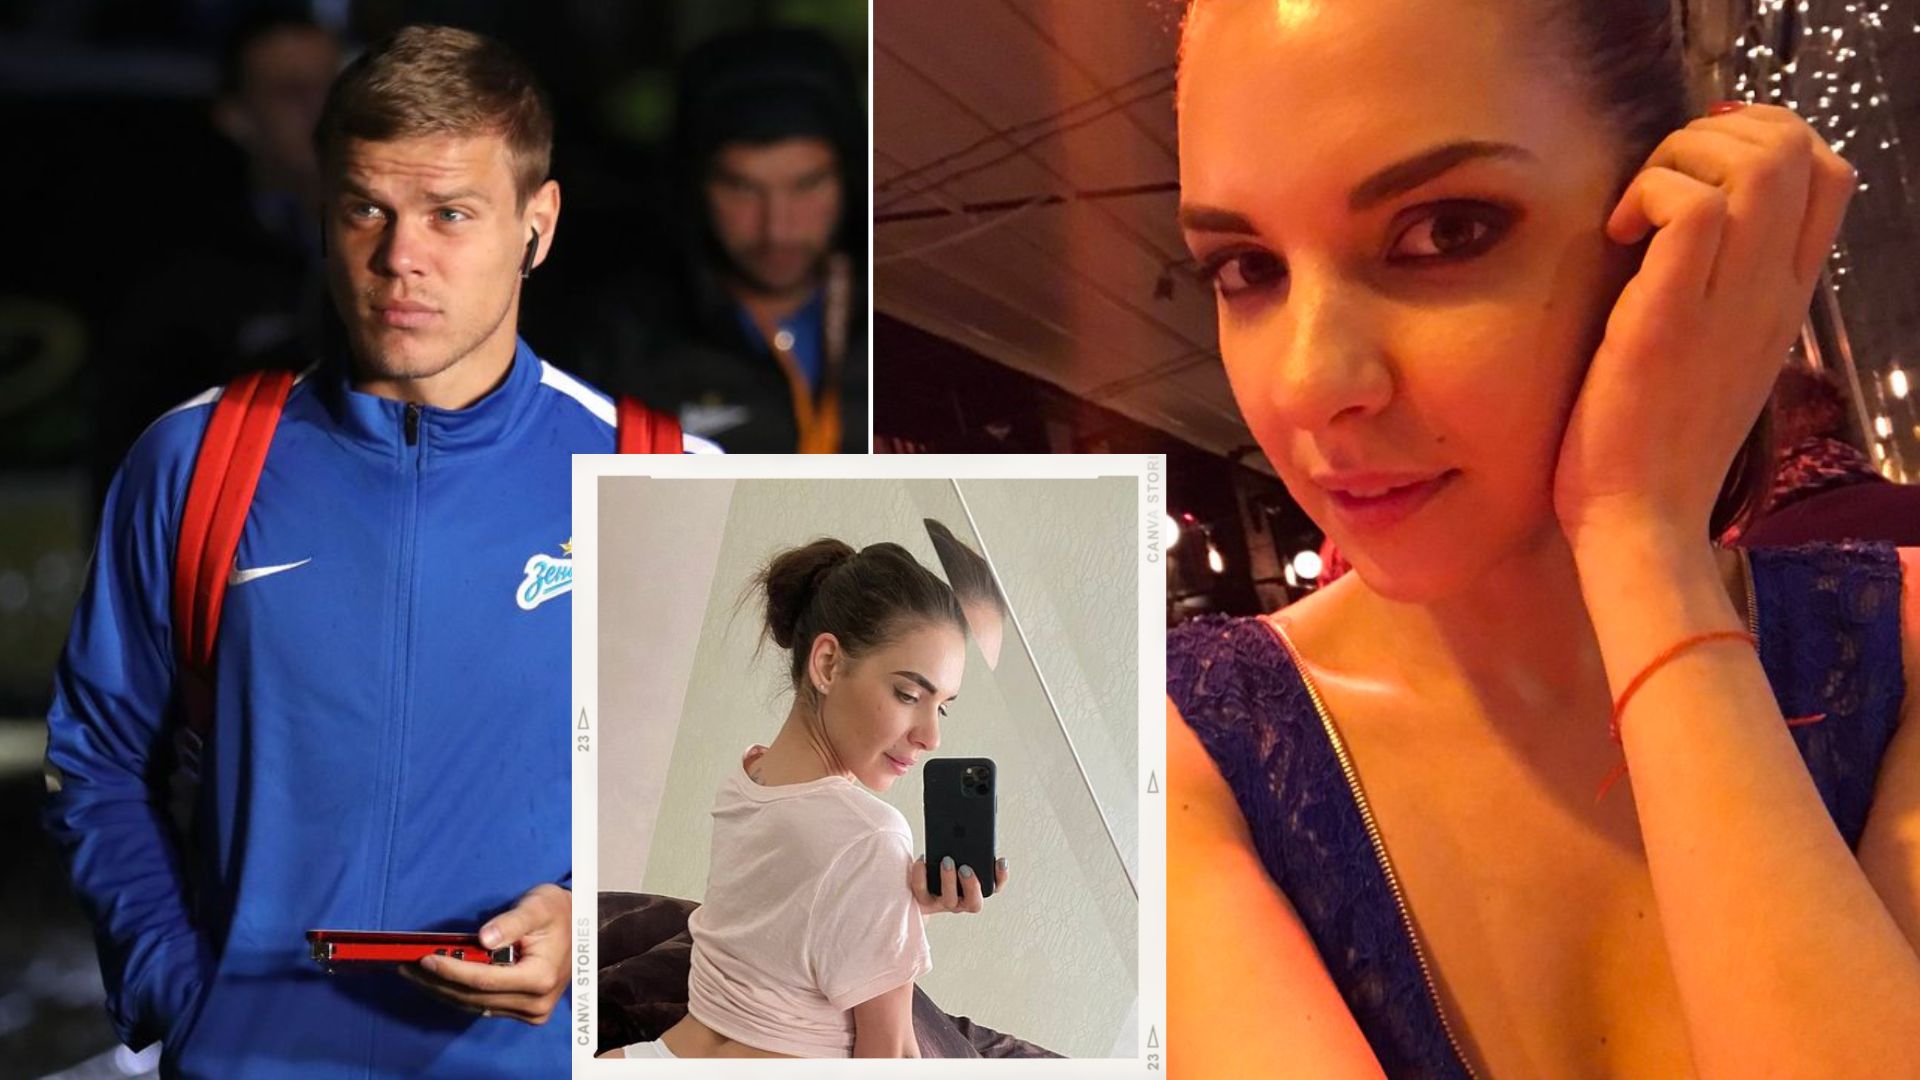 Porn star offered Russian international 16-hour sex marathon if he scored 5 goals CaughtOffside